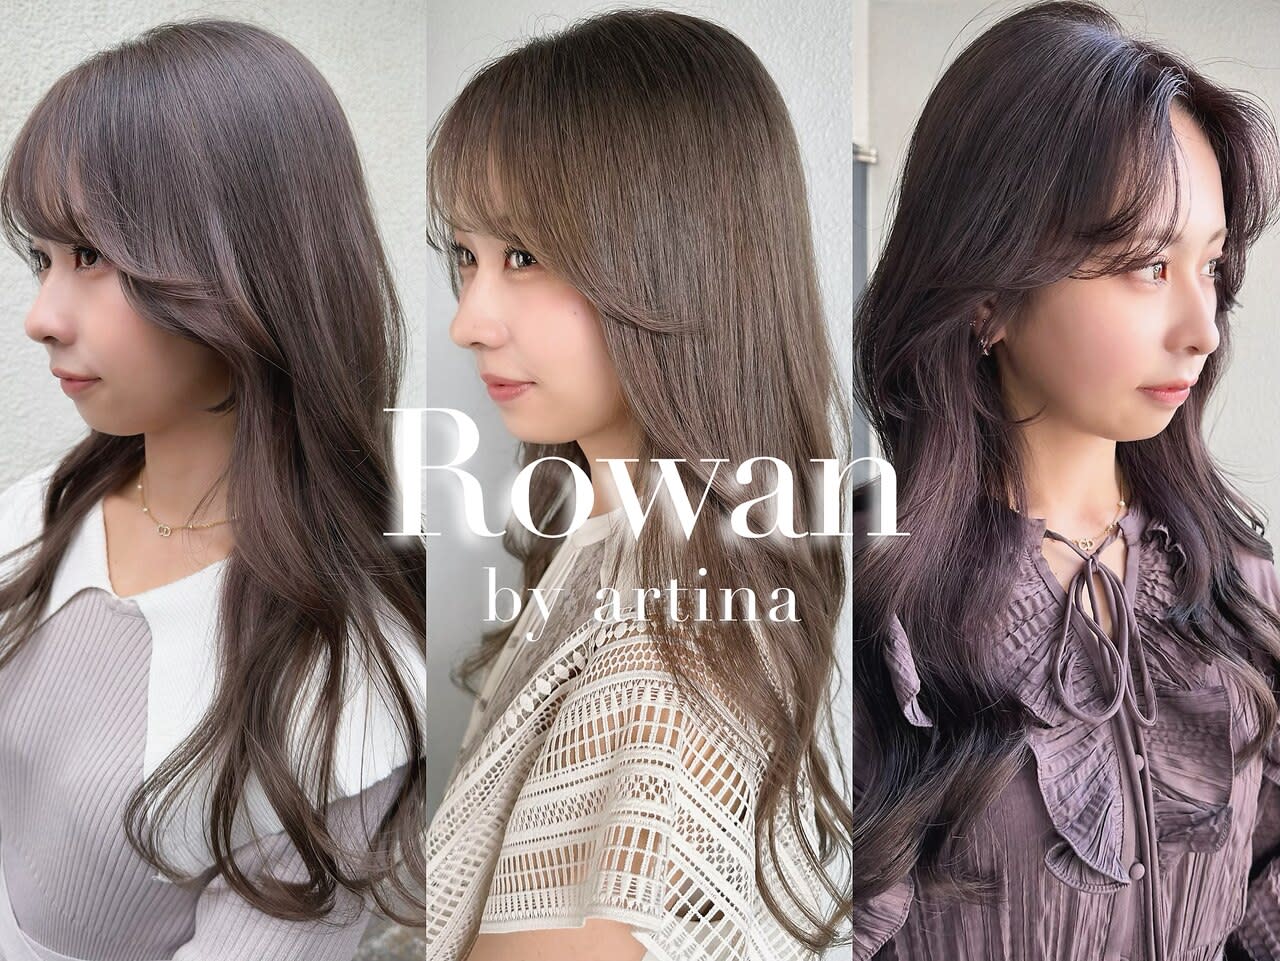 Rowan by artina 横須賀中央店のアイキャッチ画像